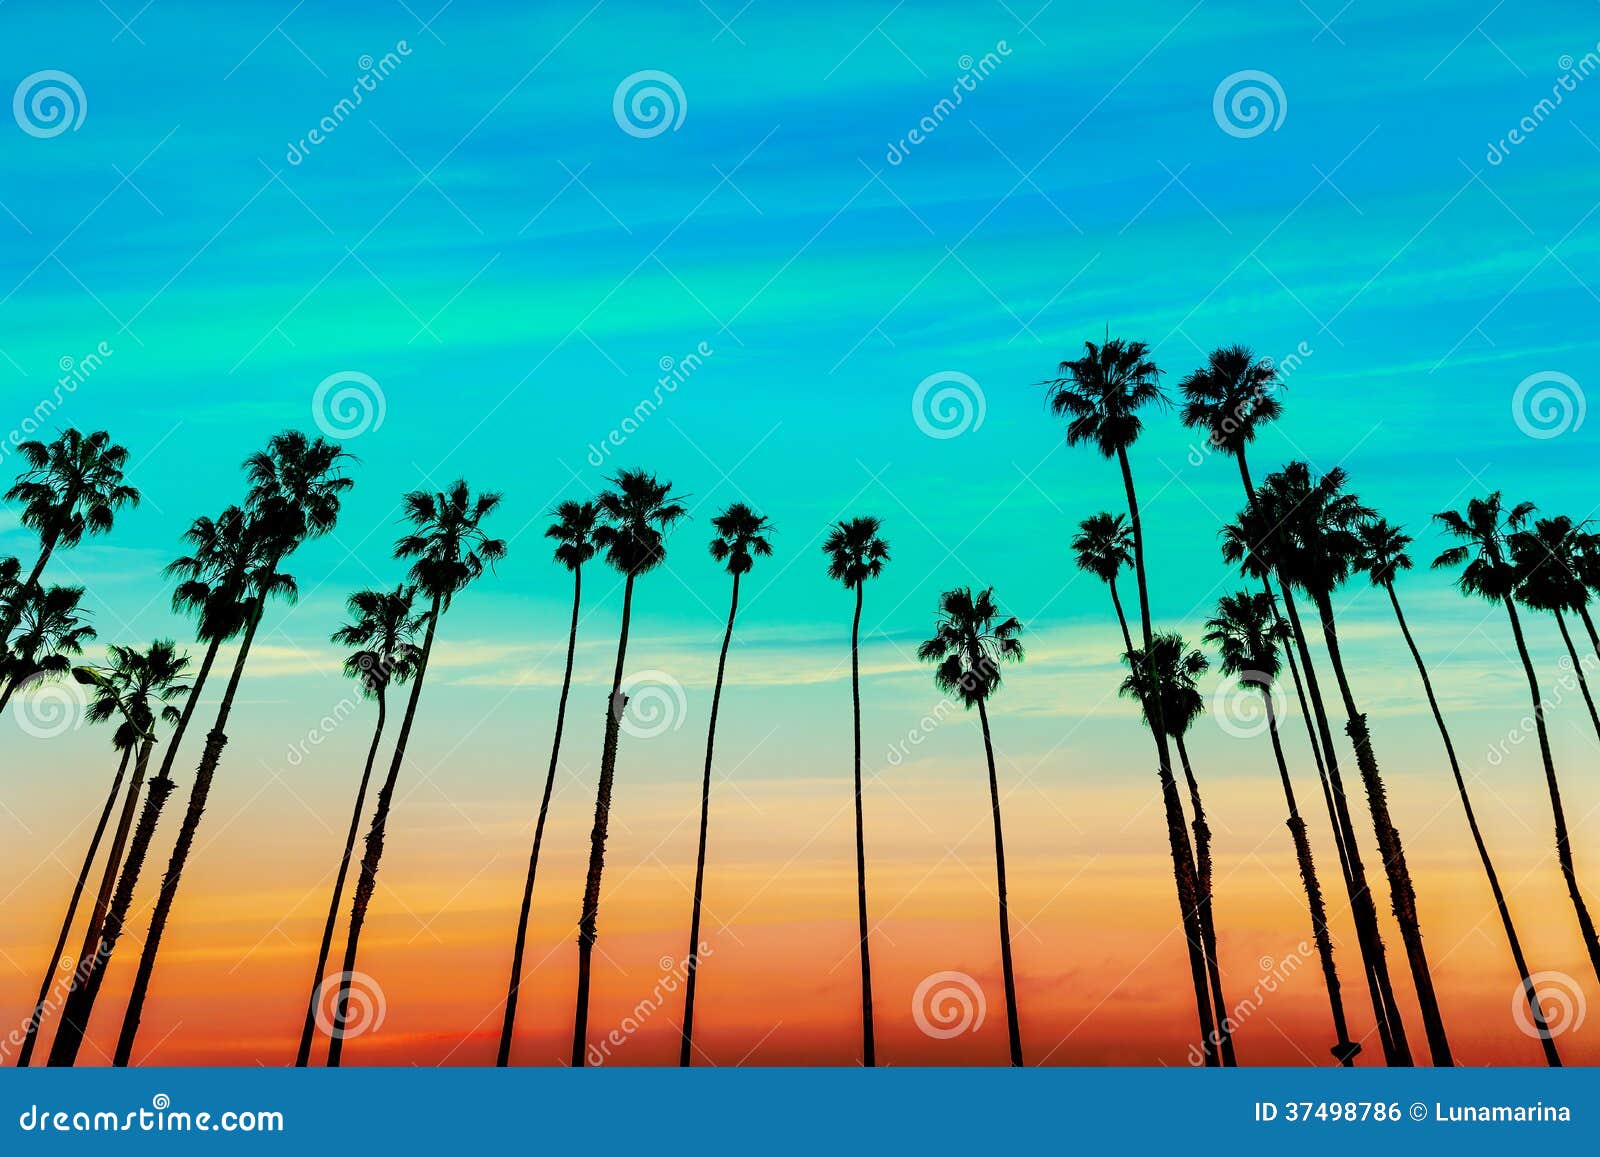 california sunset palm tree rows in santa barbara